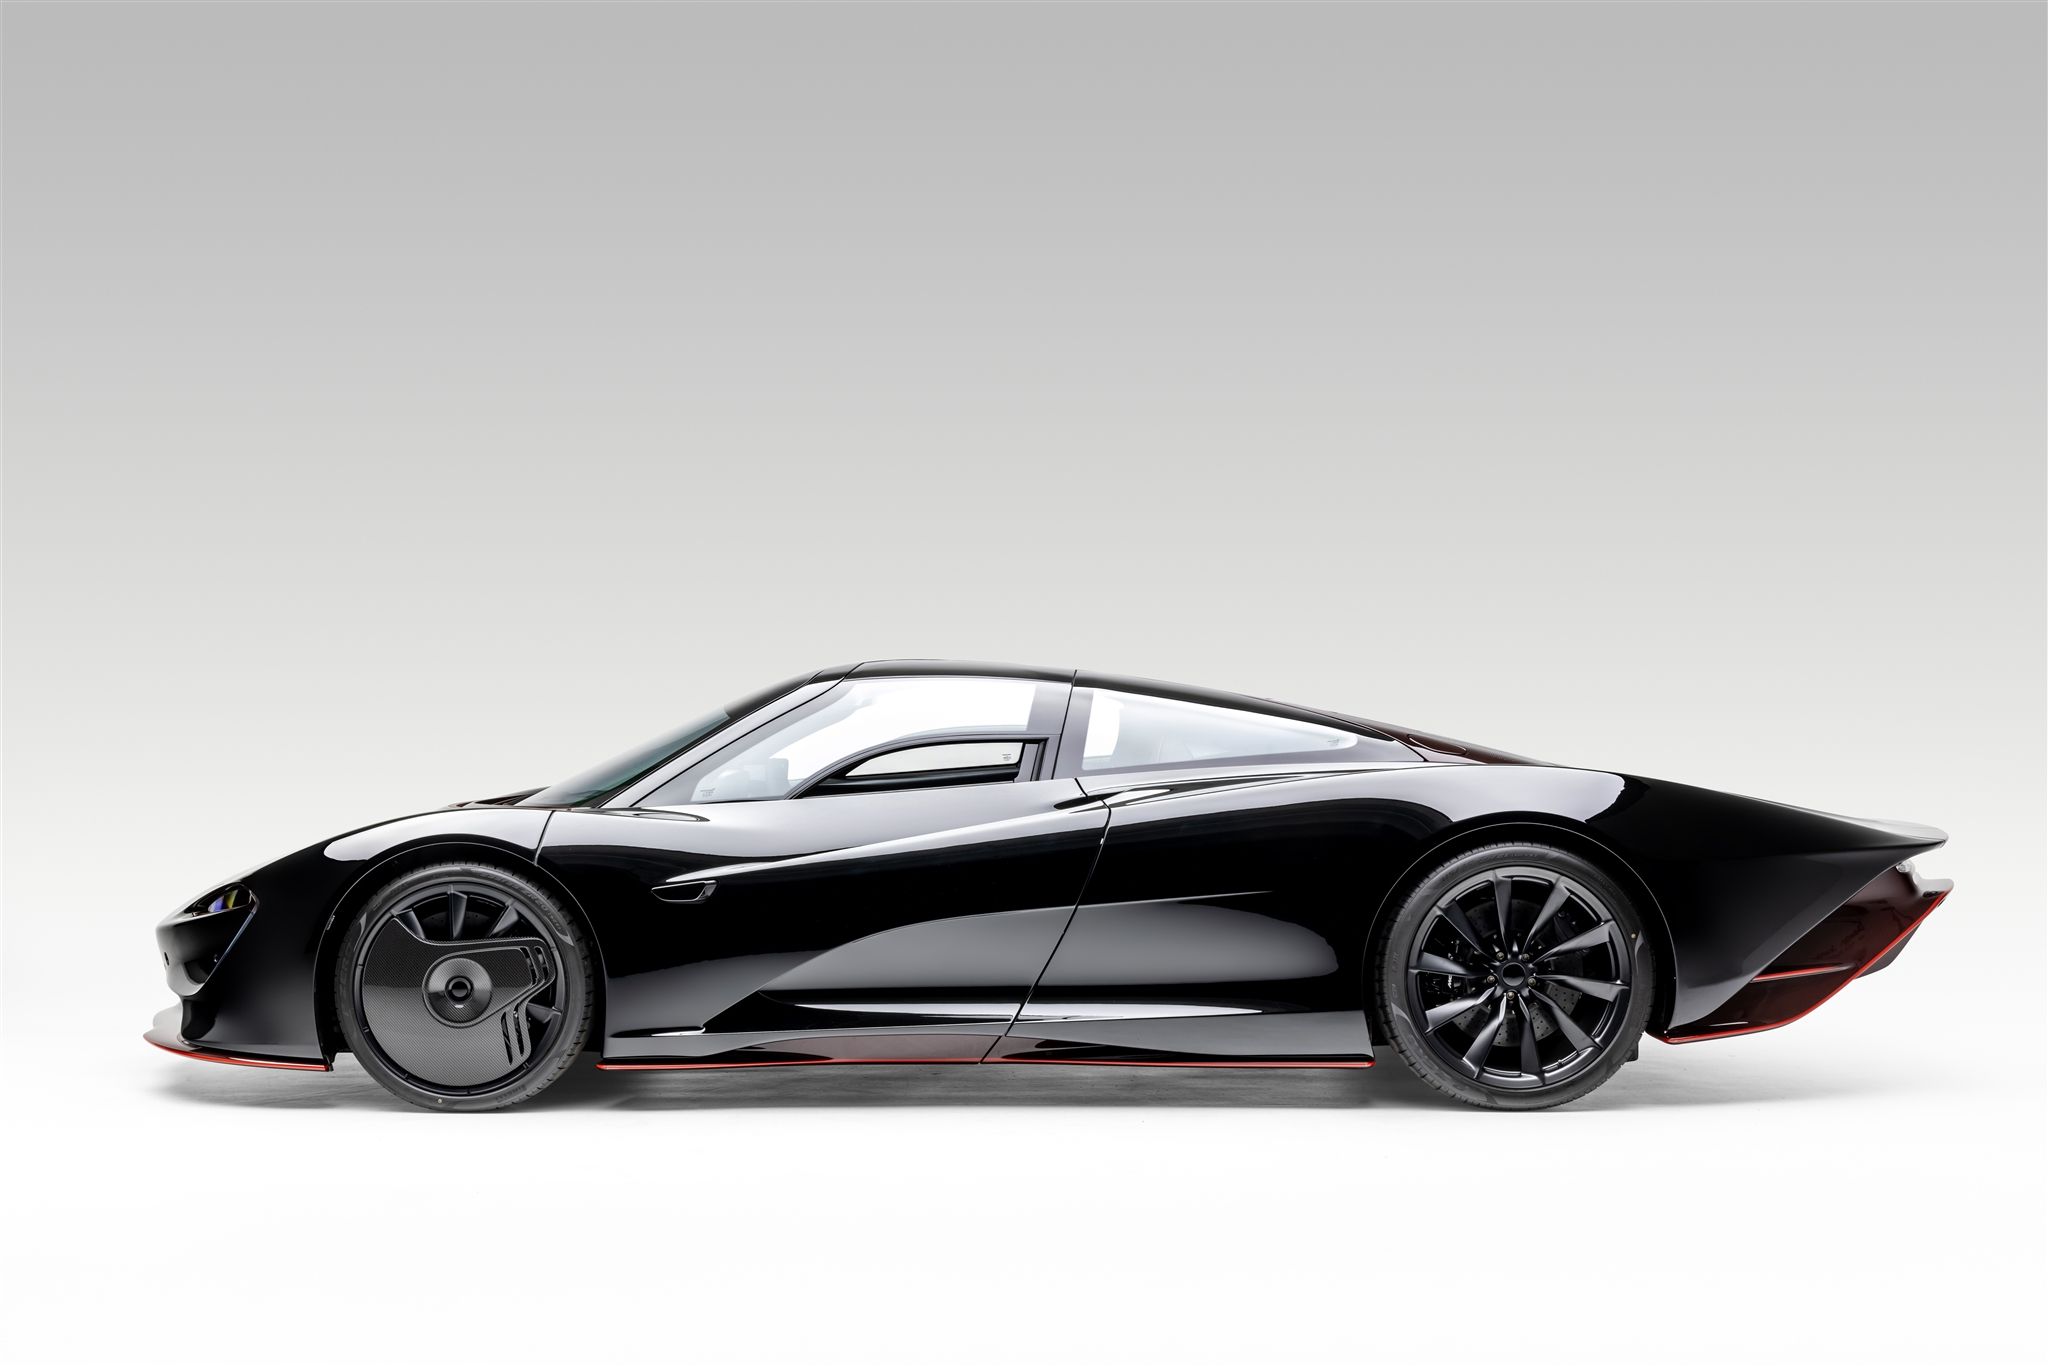 Bugatti reveals its most powerful supercar yet: The $10 million Centodieci